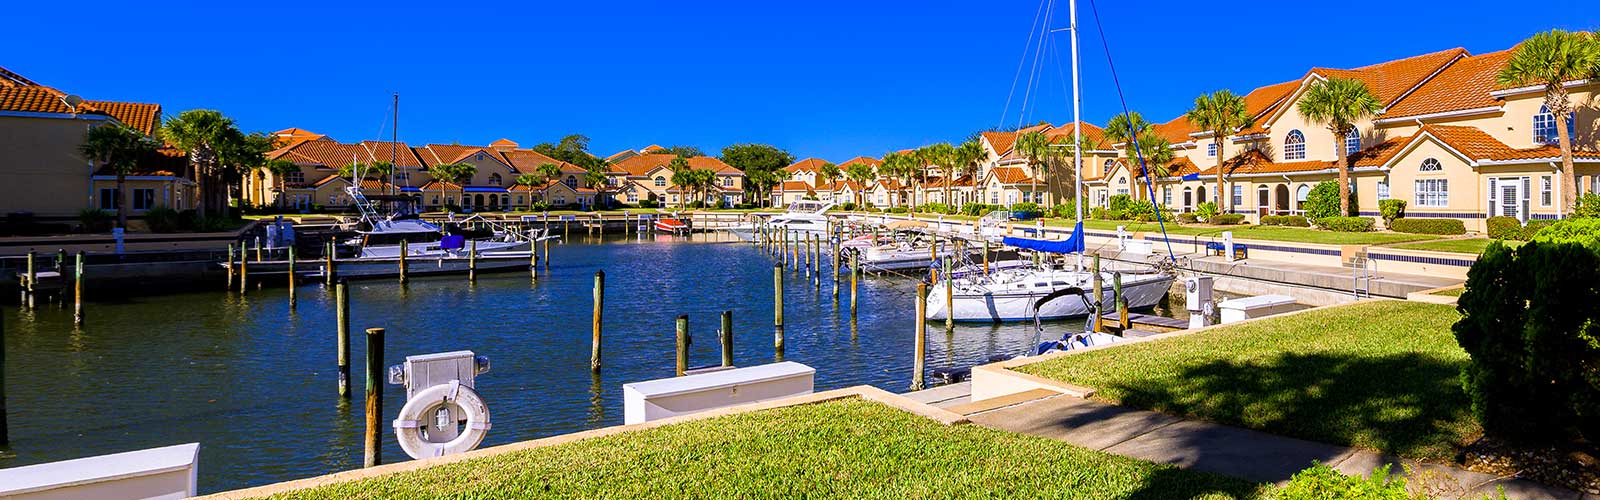 Marina Cove - Condo Community in Palm Coast, Florida